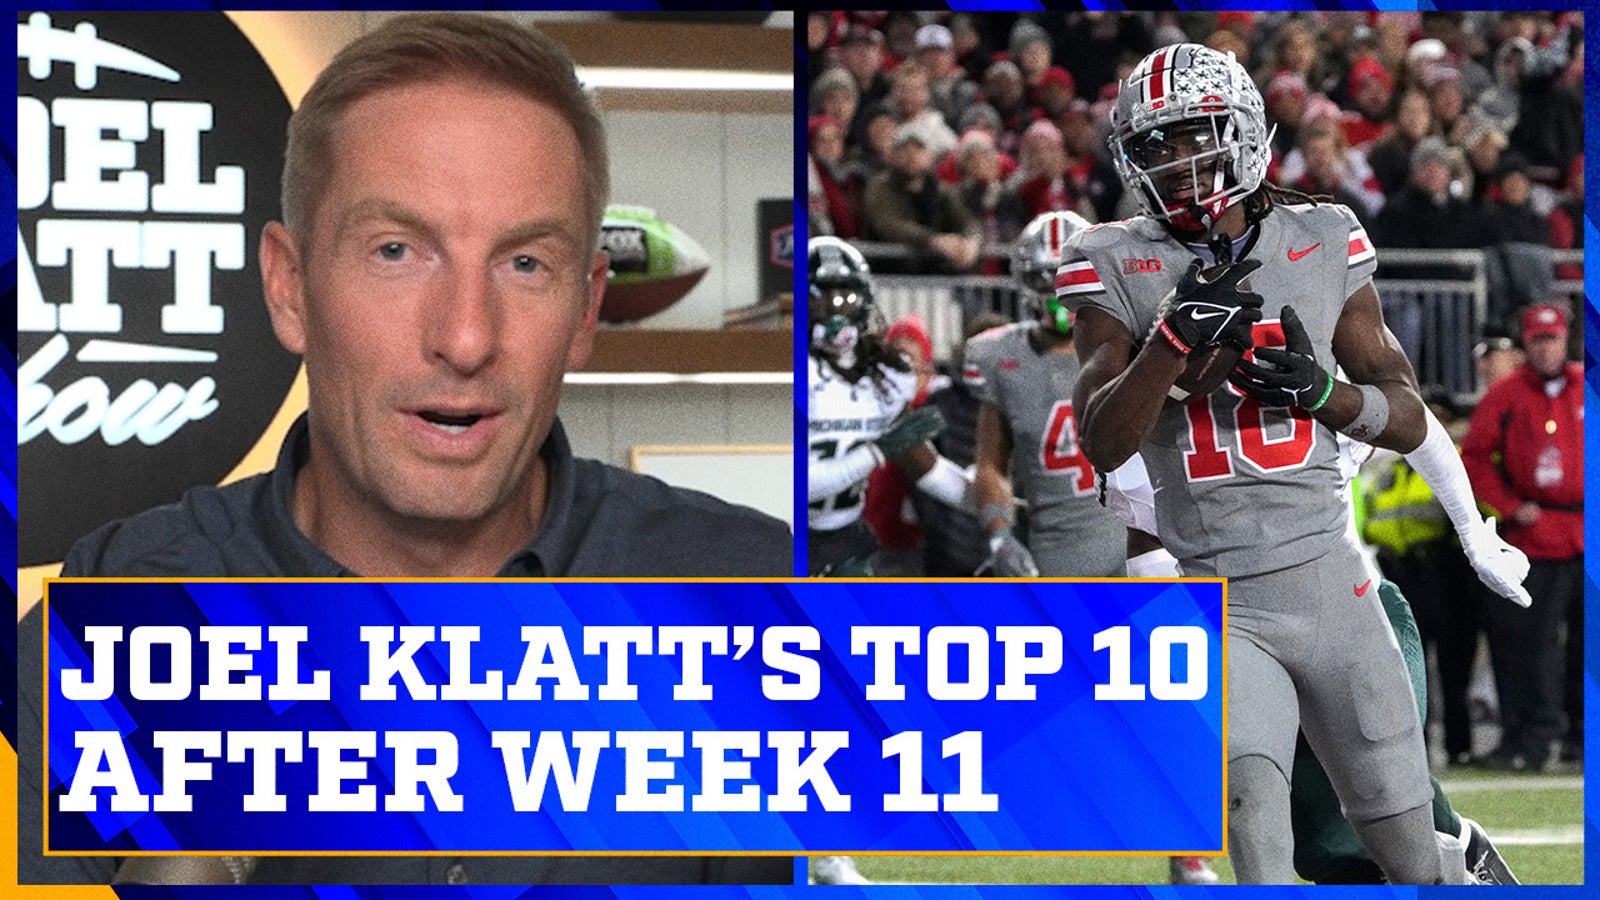 Florida State ranked behind Texas and Alabama in Joel Klatt’s top 10 